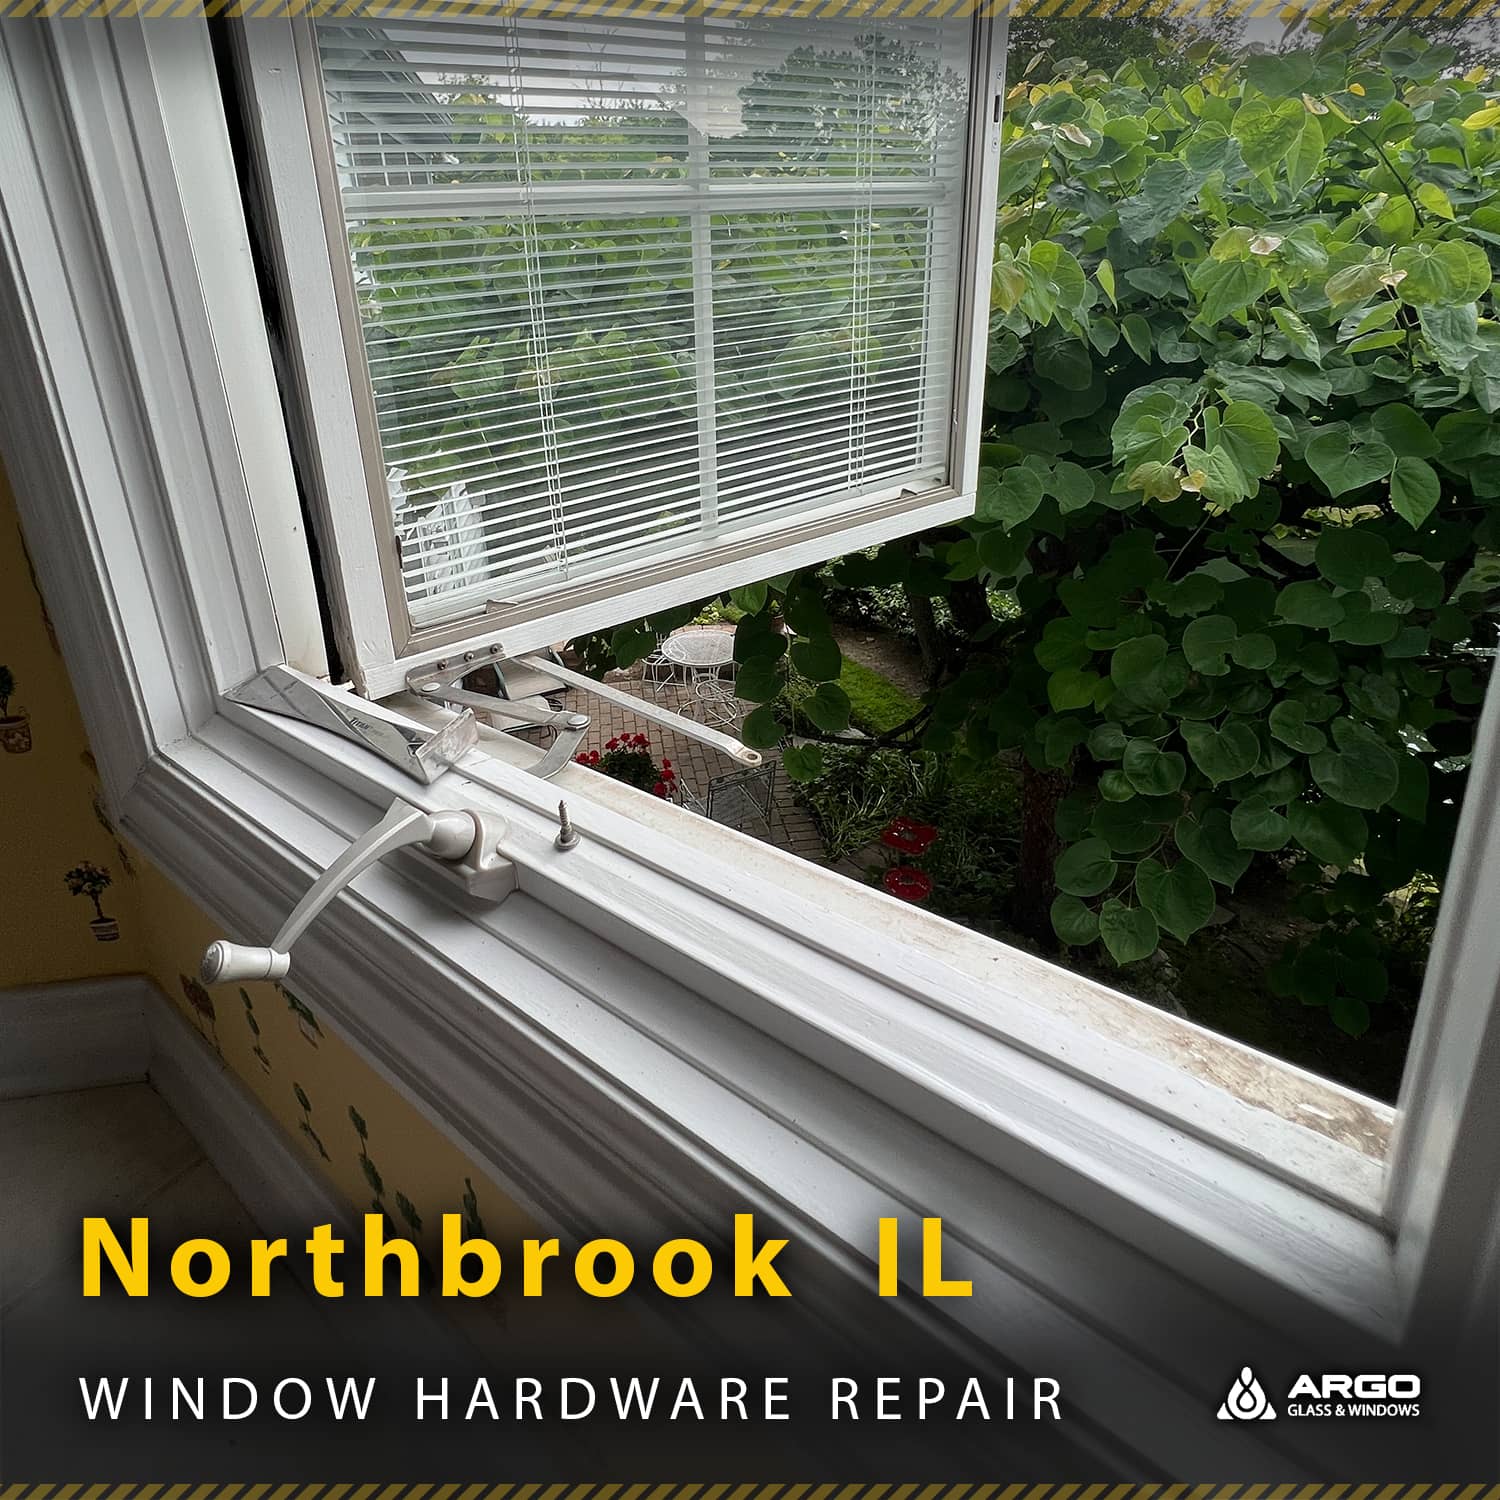 Professional Window Hardware Repair company